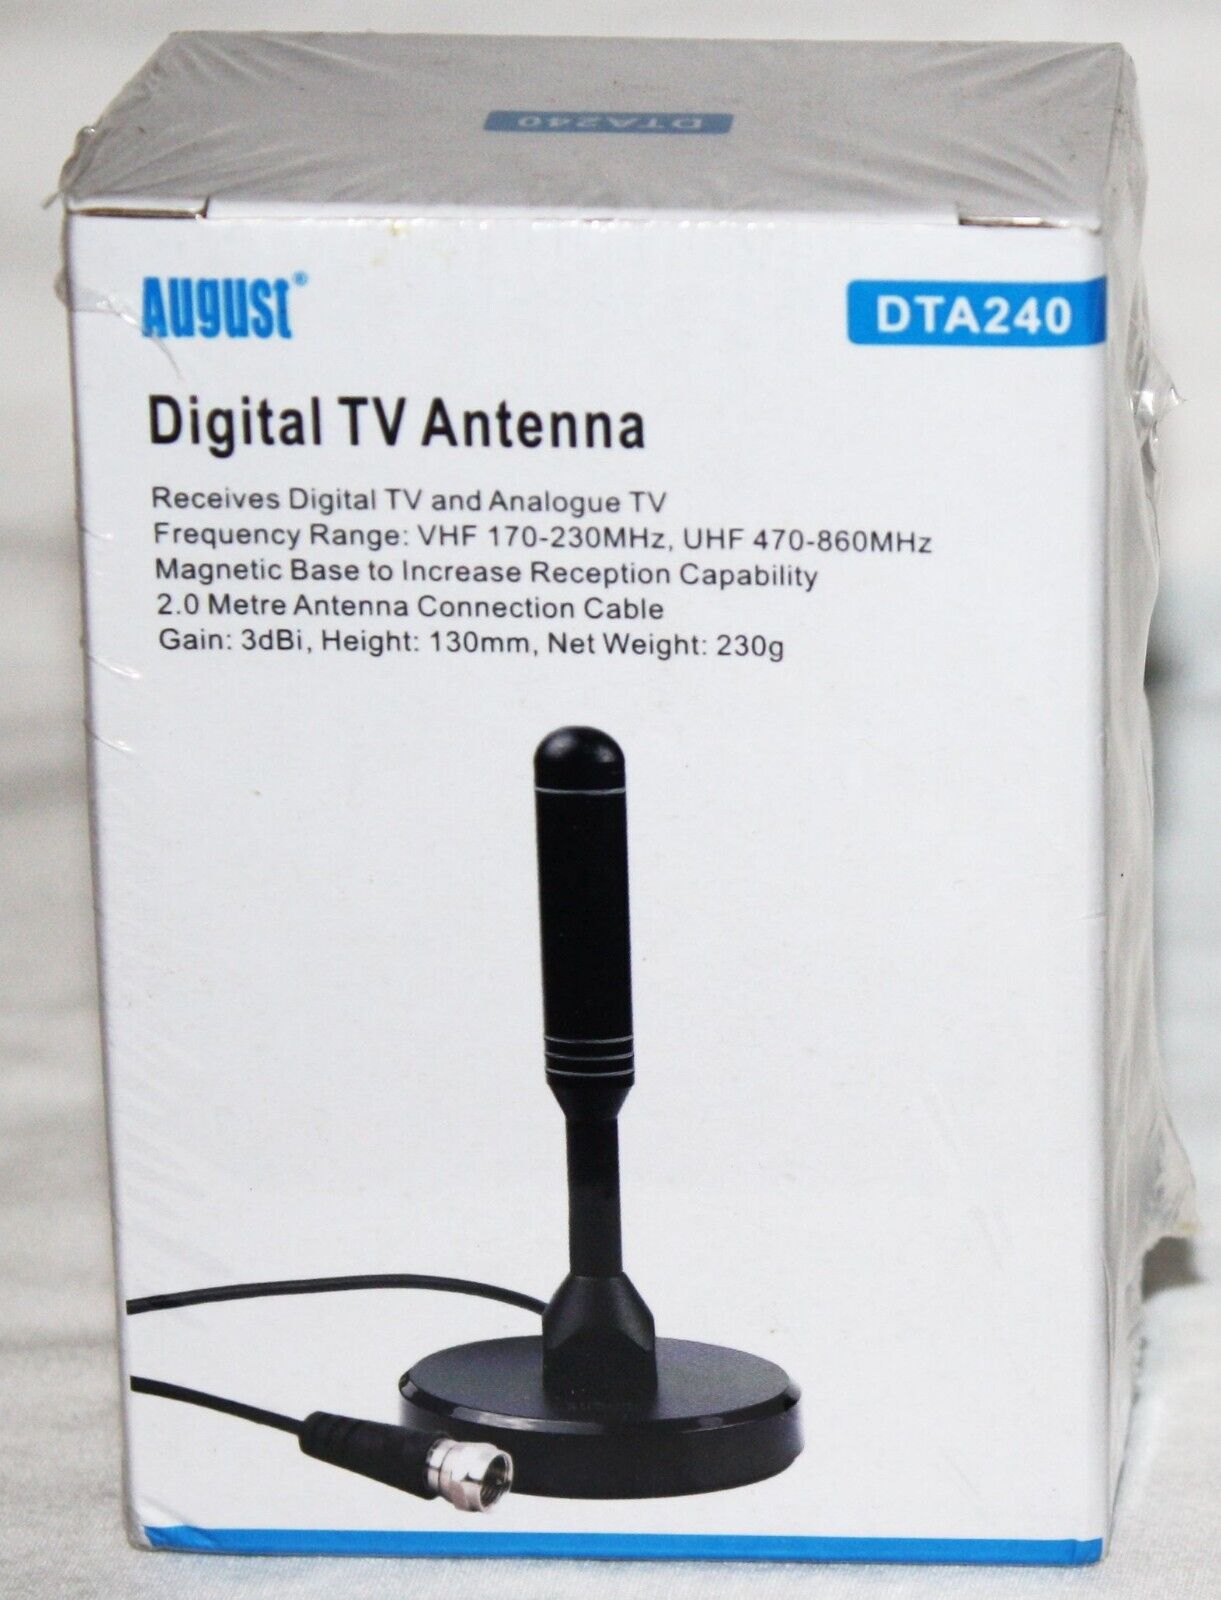 August DTA240 High Gain Digital TV Aerial - Portable In/Outdoor Digital Antenna